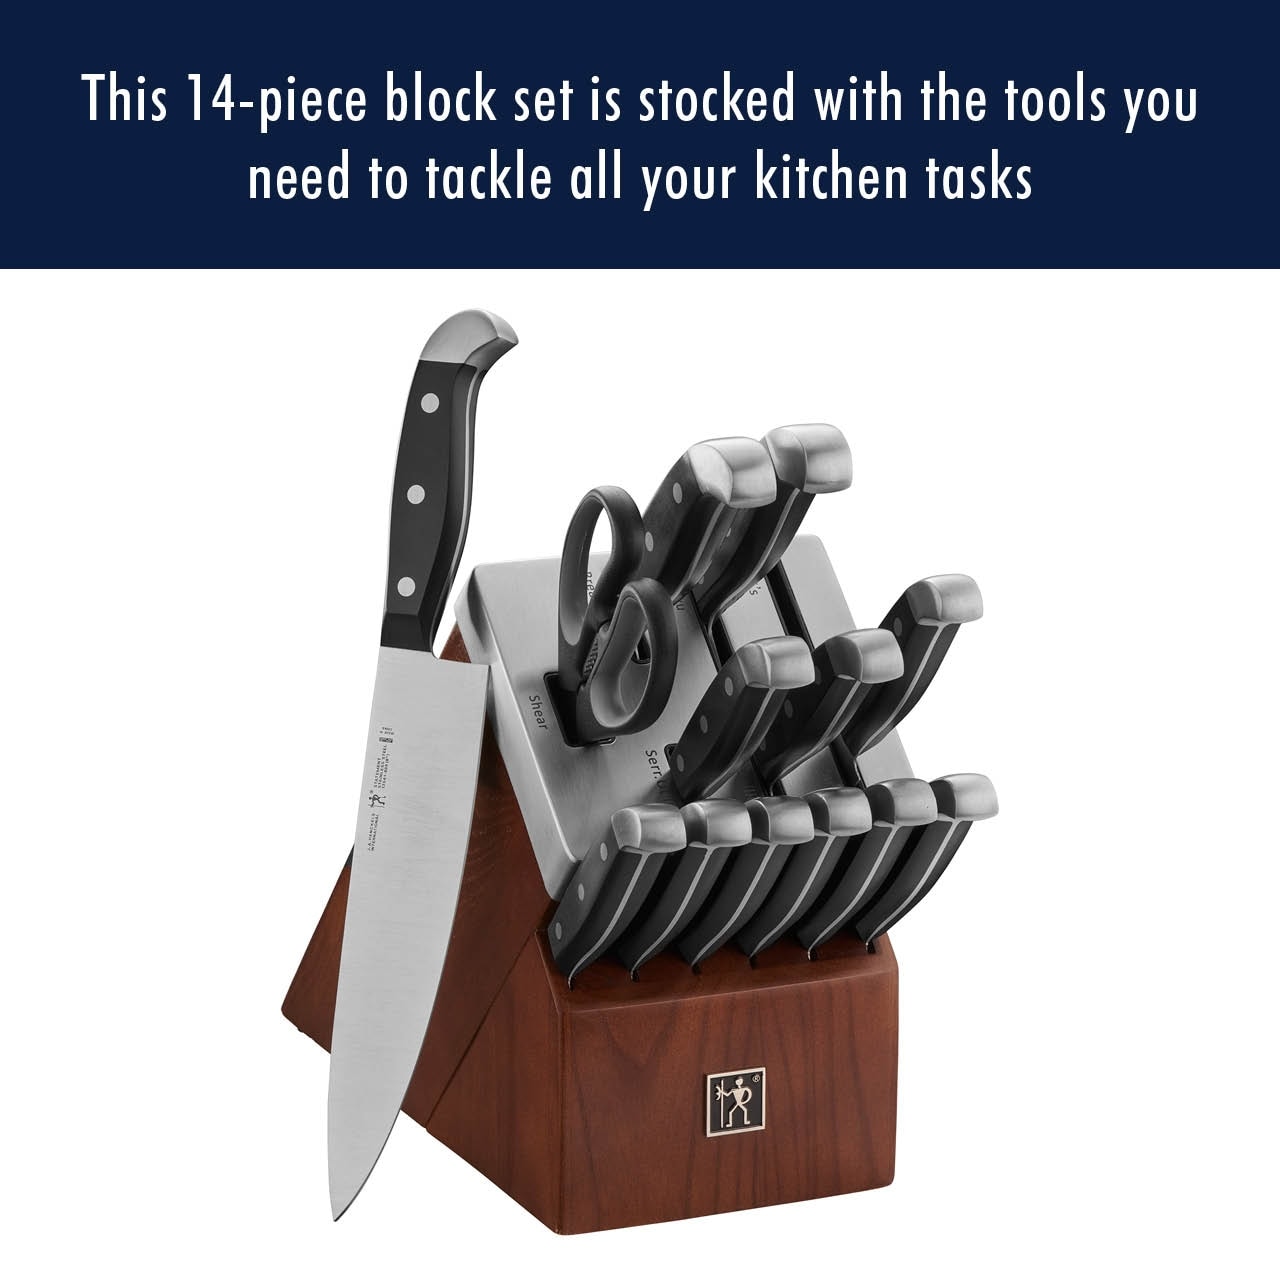 Henckels Diamond 13-Piece Self-Sharpening Knife Block Set